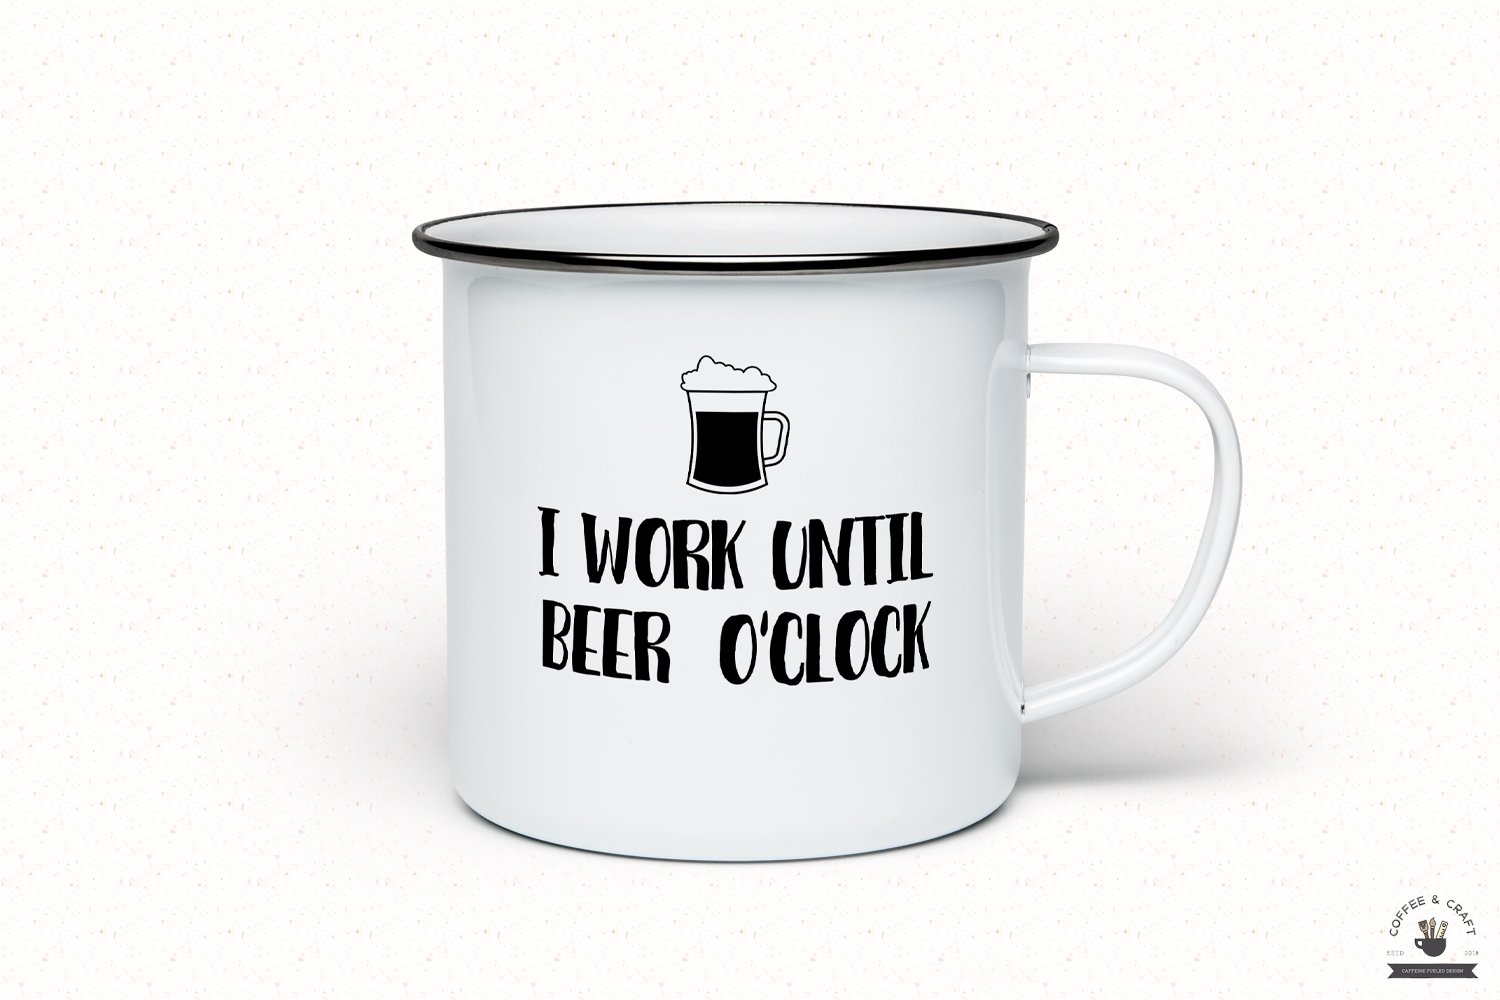 Iron mug with beer phrase.